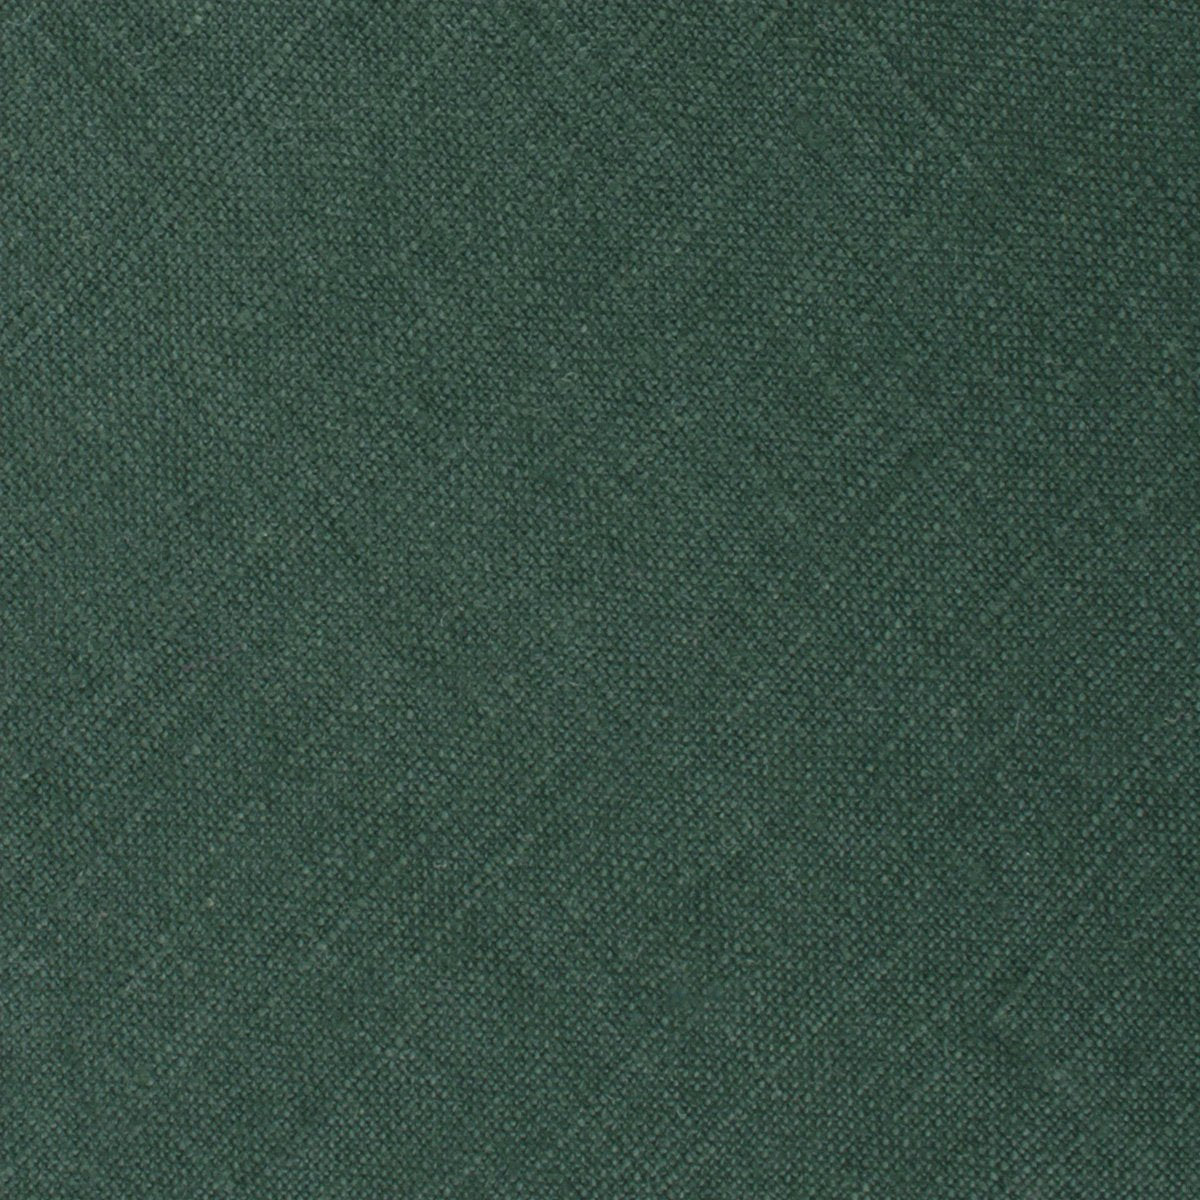 Dusty Emerald Green Linen Necktie Fabric